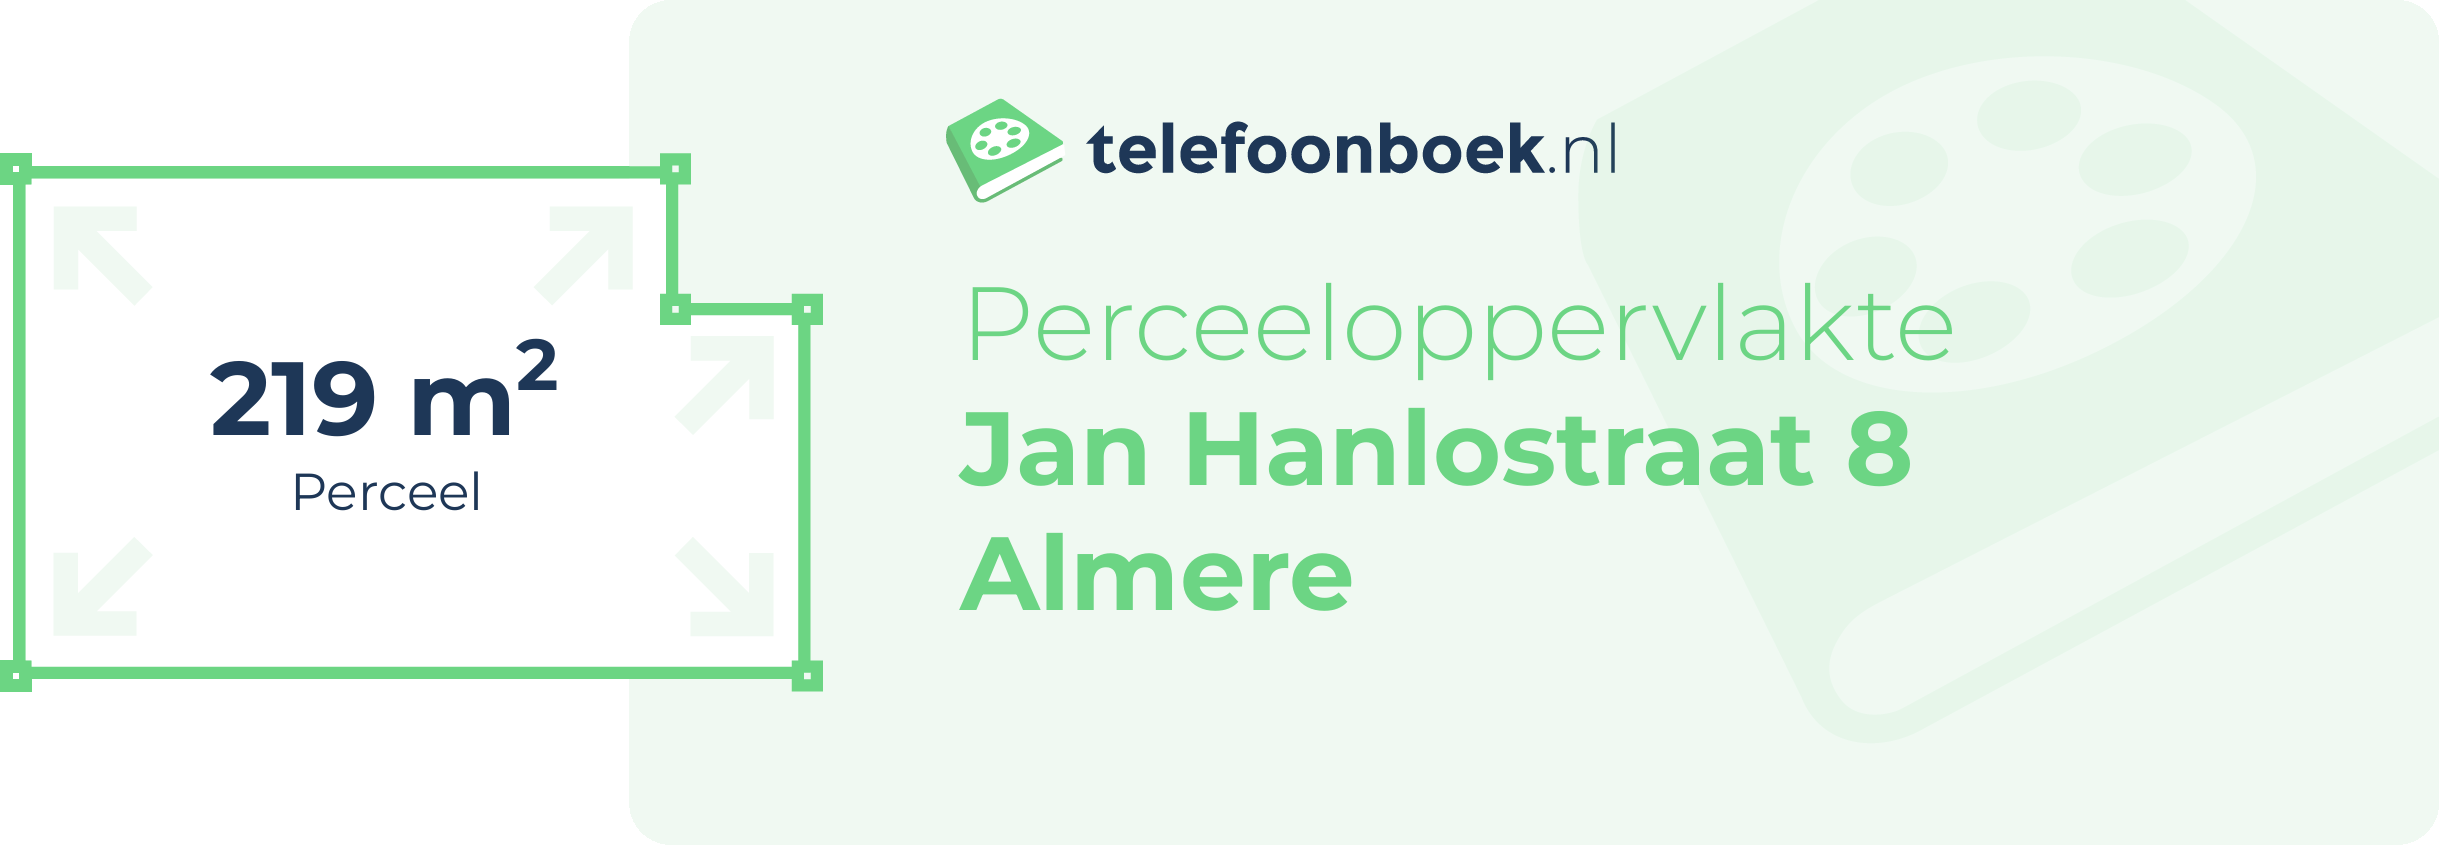 Perceeloppervlakte Jan Hanlostraat 8 Almere